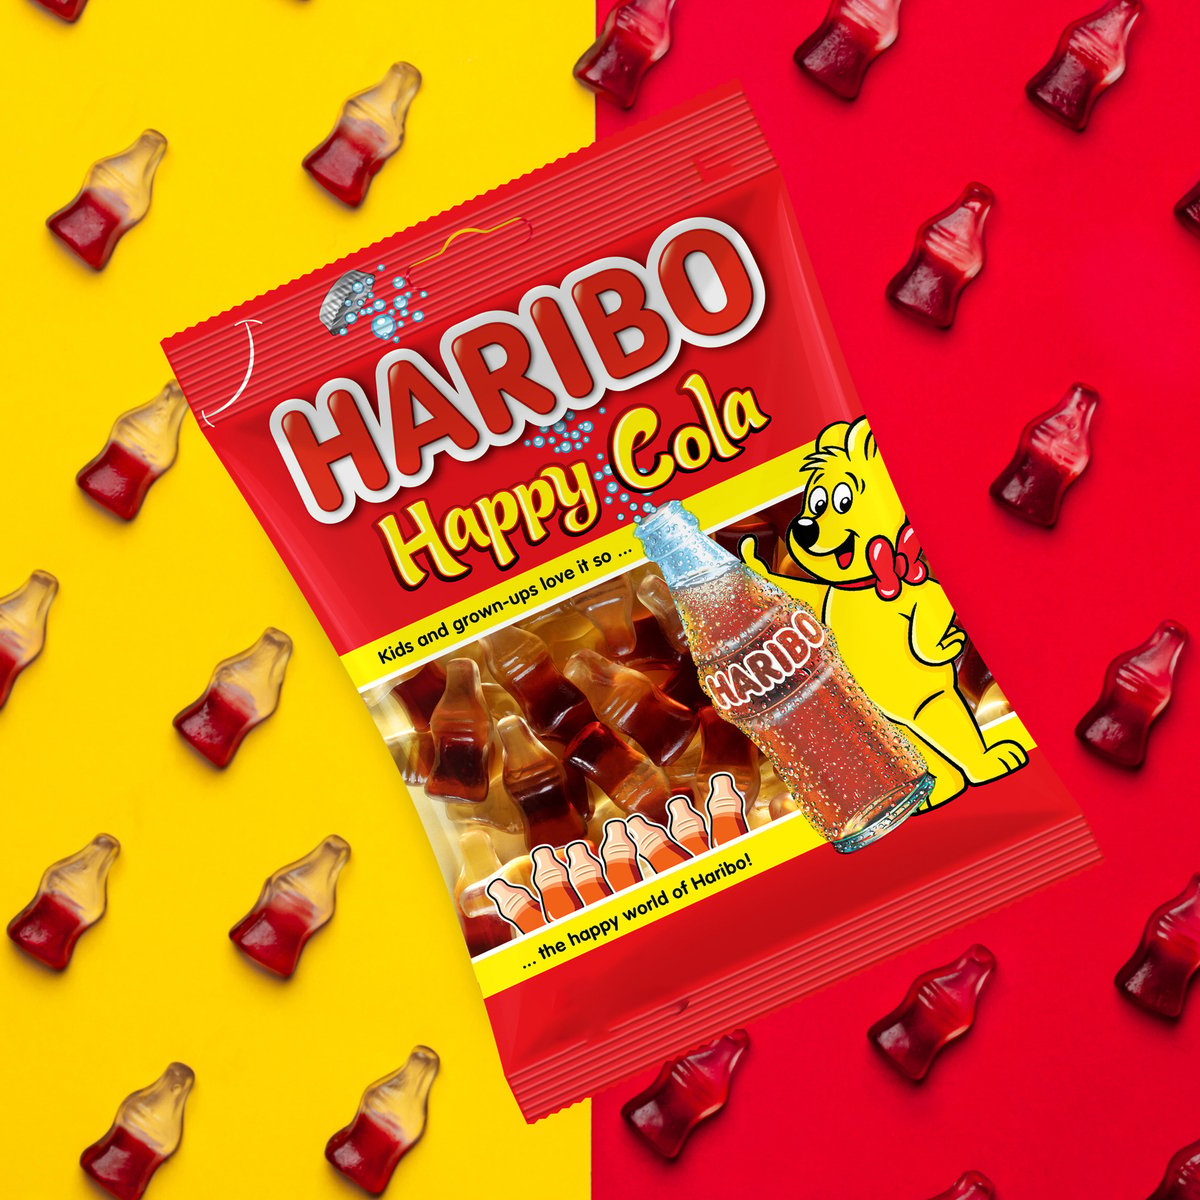 Haribo Happy Cola Gummy Candy 80 g